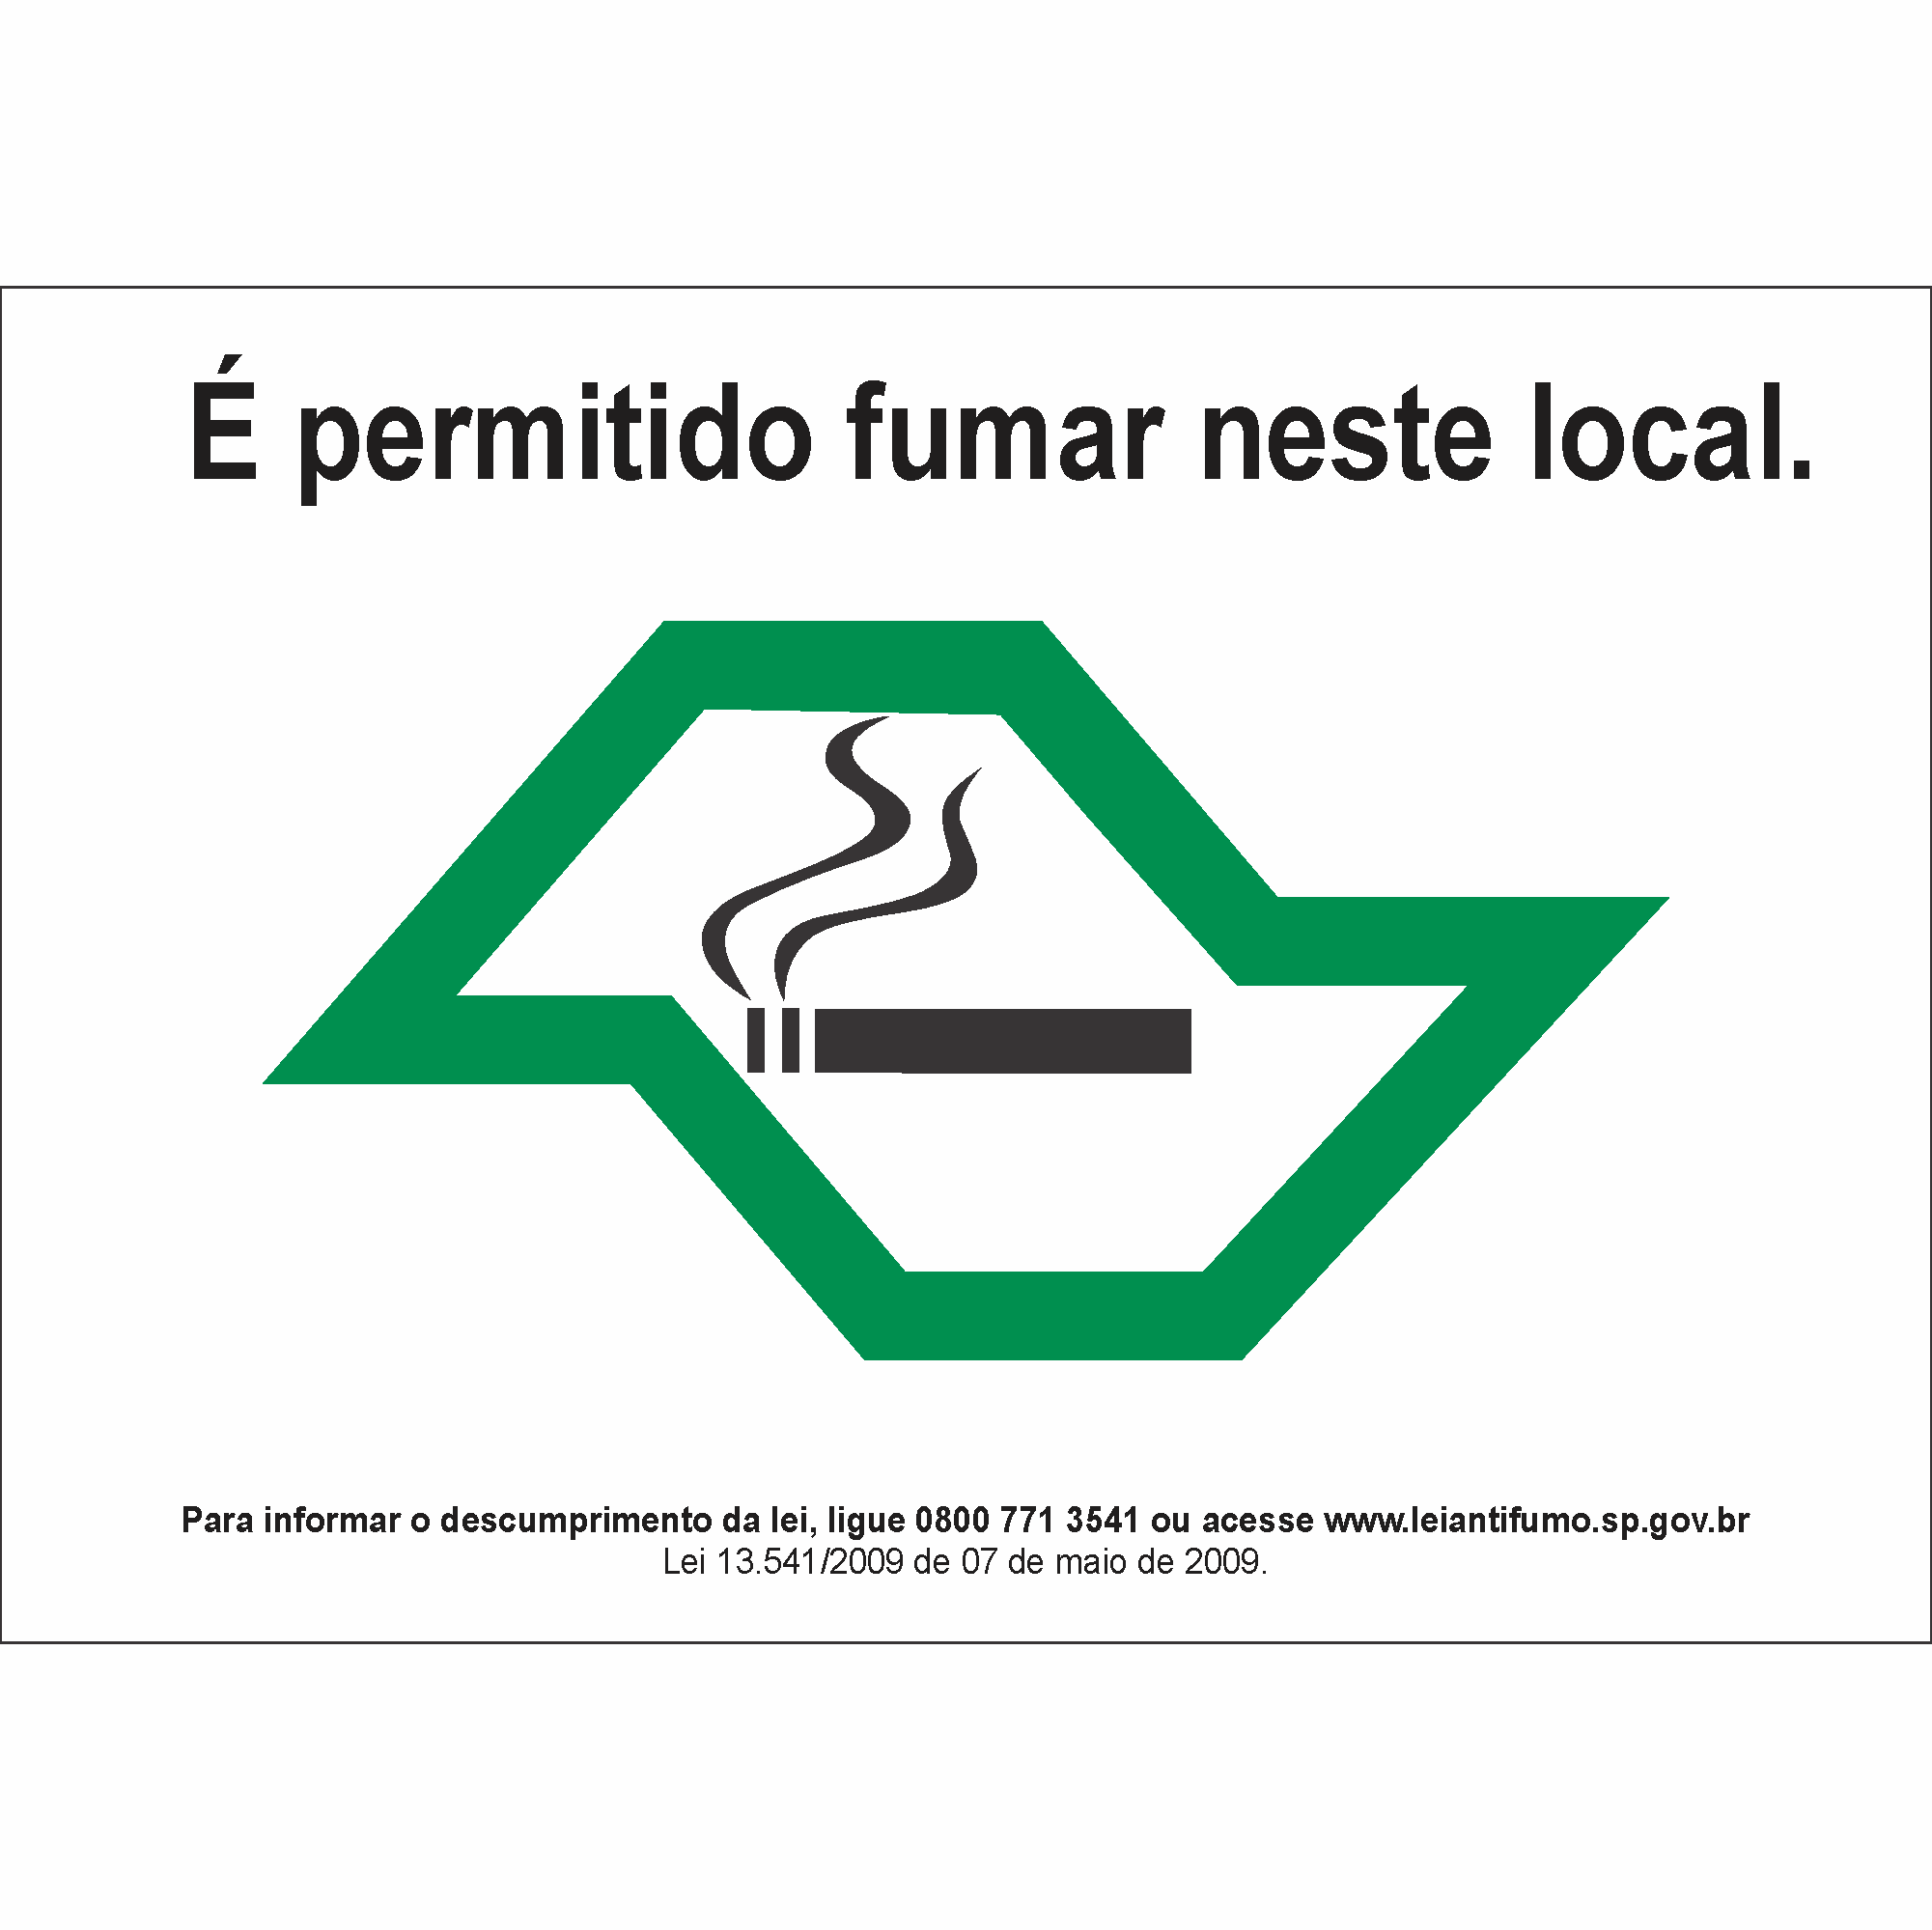 PLS 09 - É permitido fumar neste local